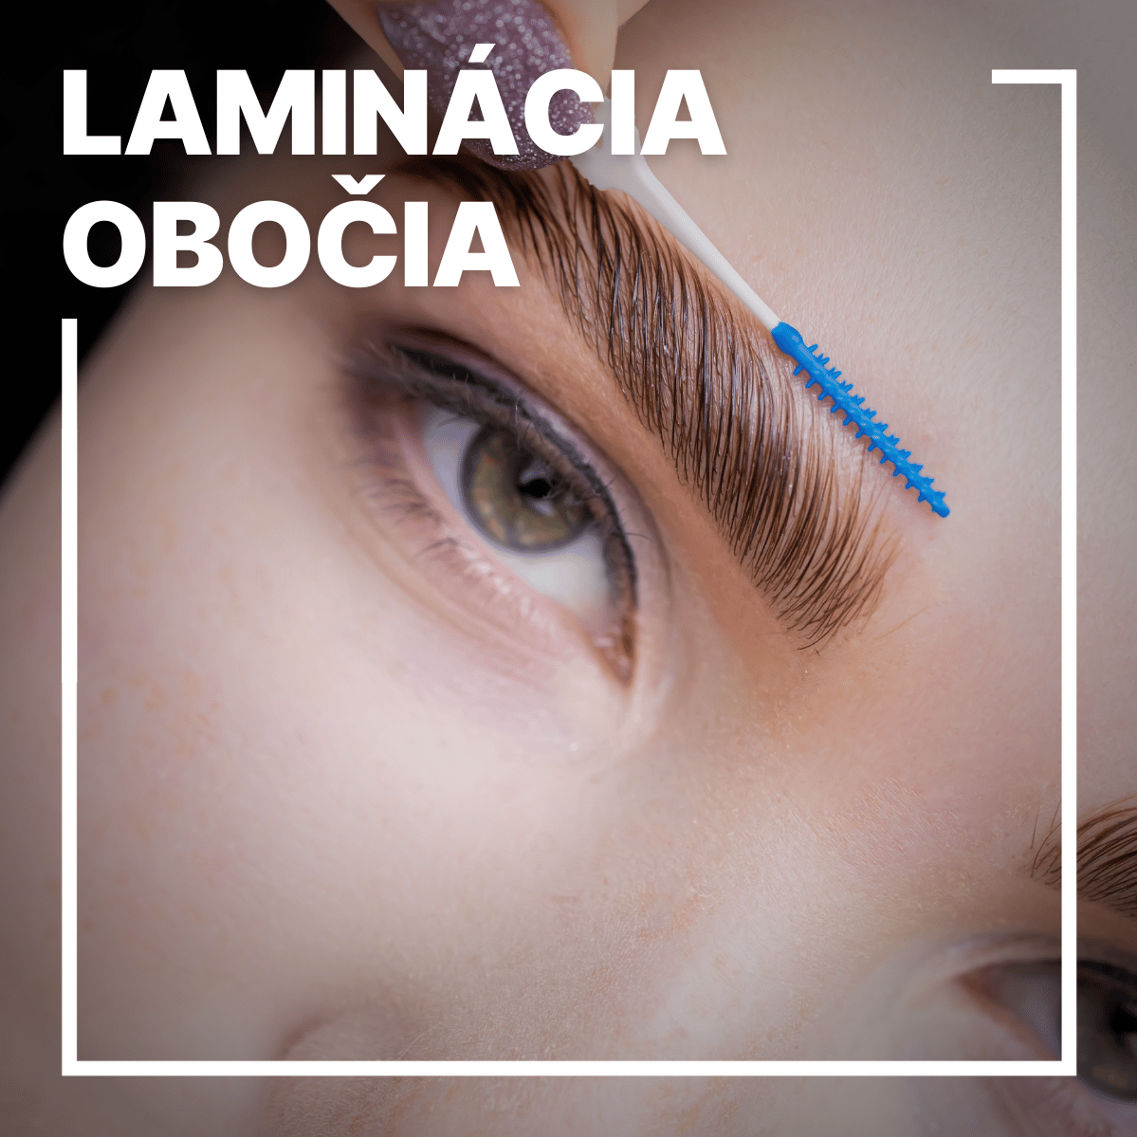 Laminacia obocia - Global Education Centre